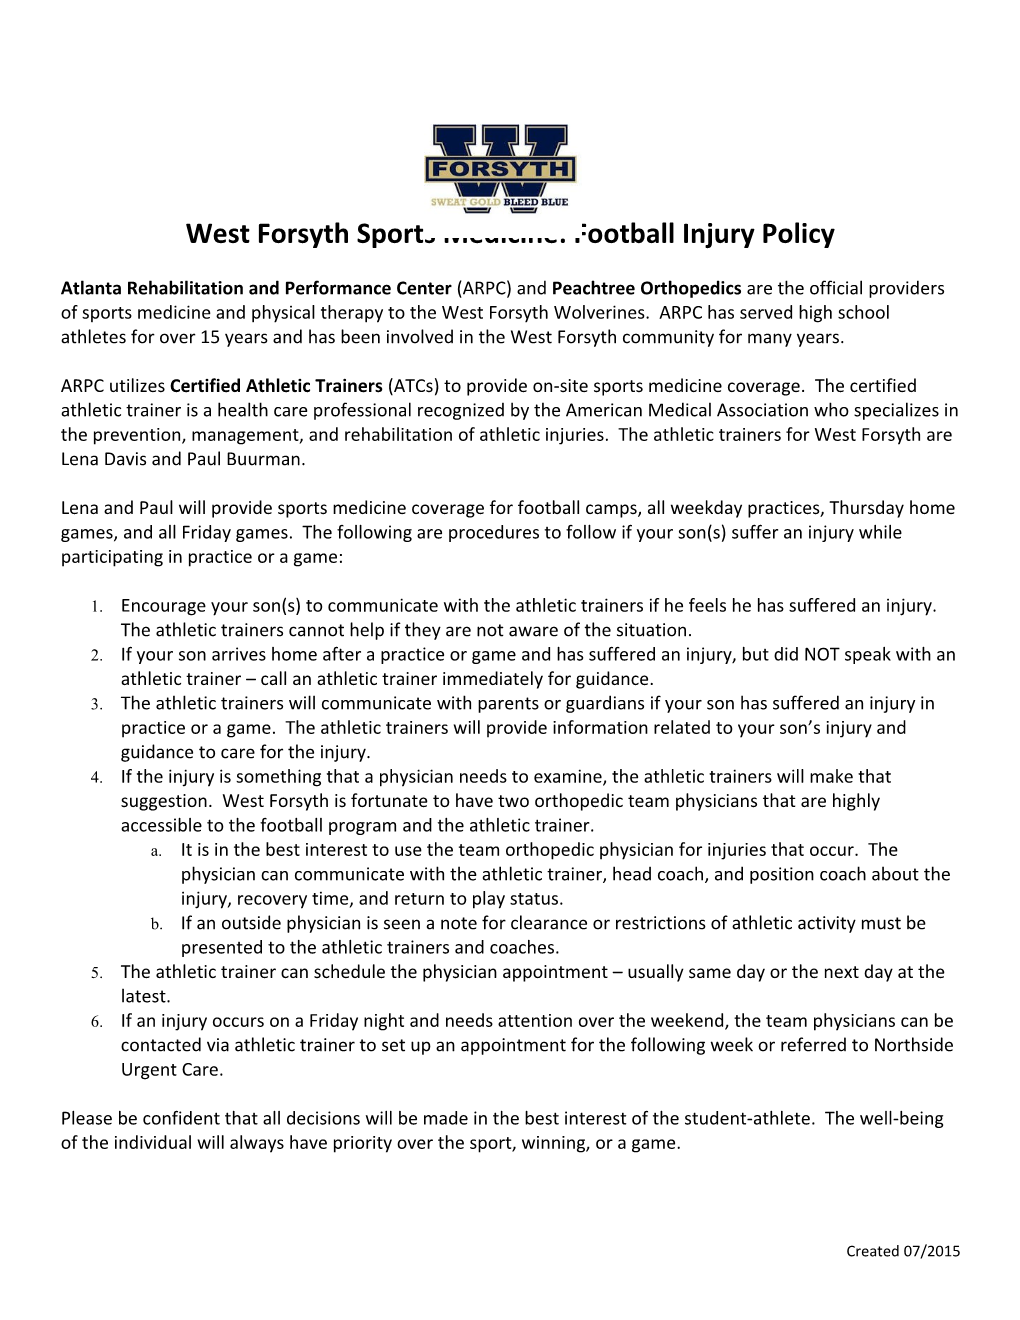 West Forsyth Sports Medicine: Football Injury Policy